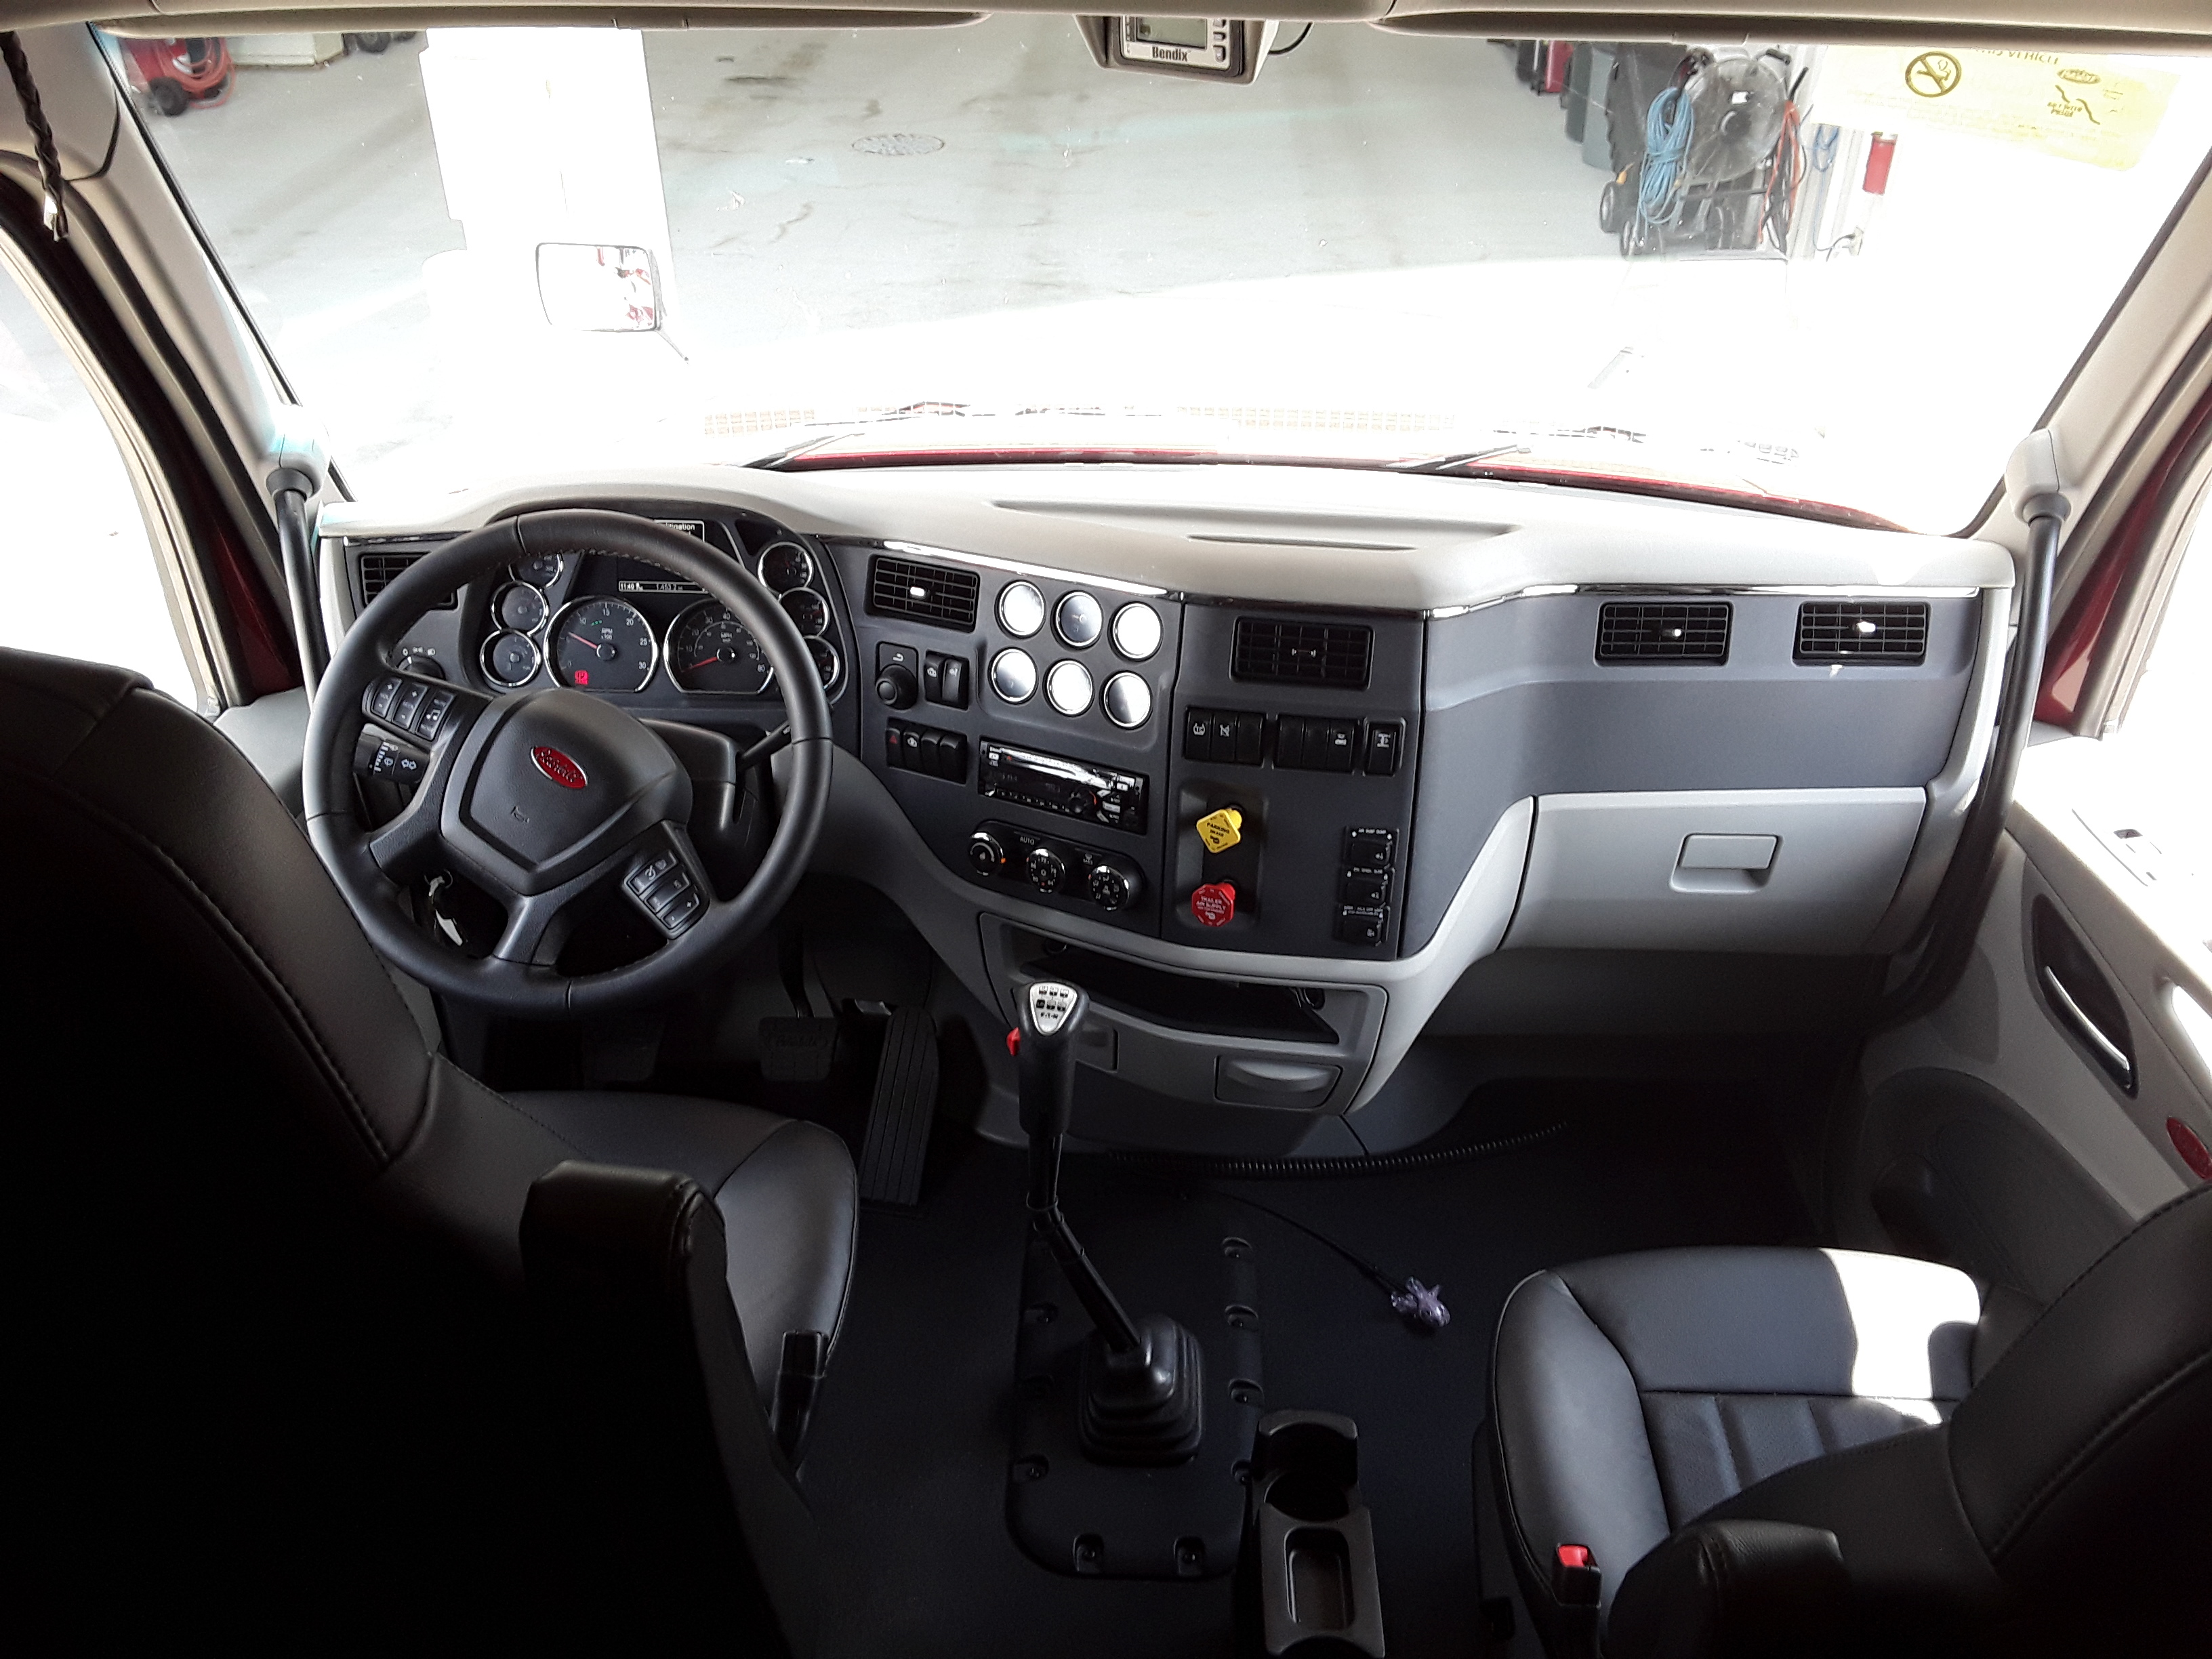 Peterbilt truck dashboard and front seats